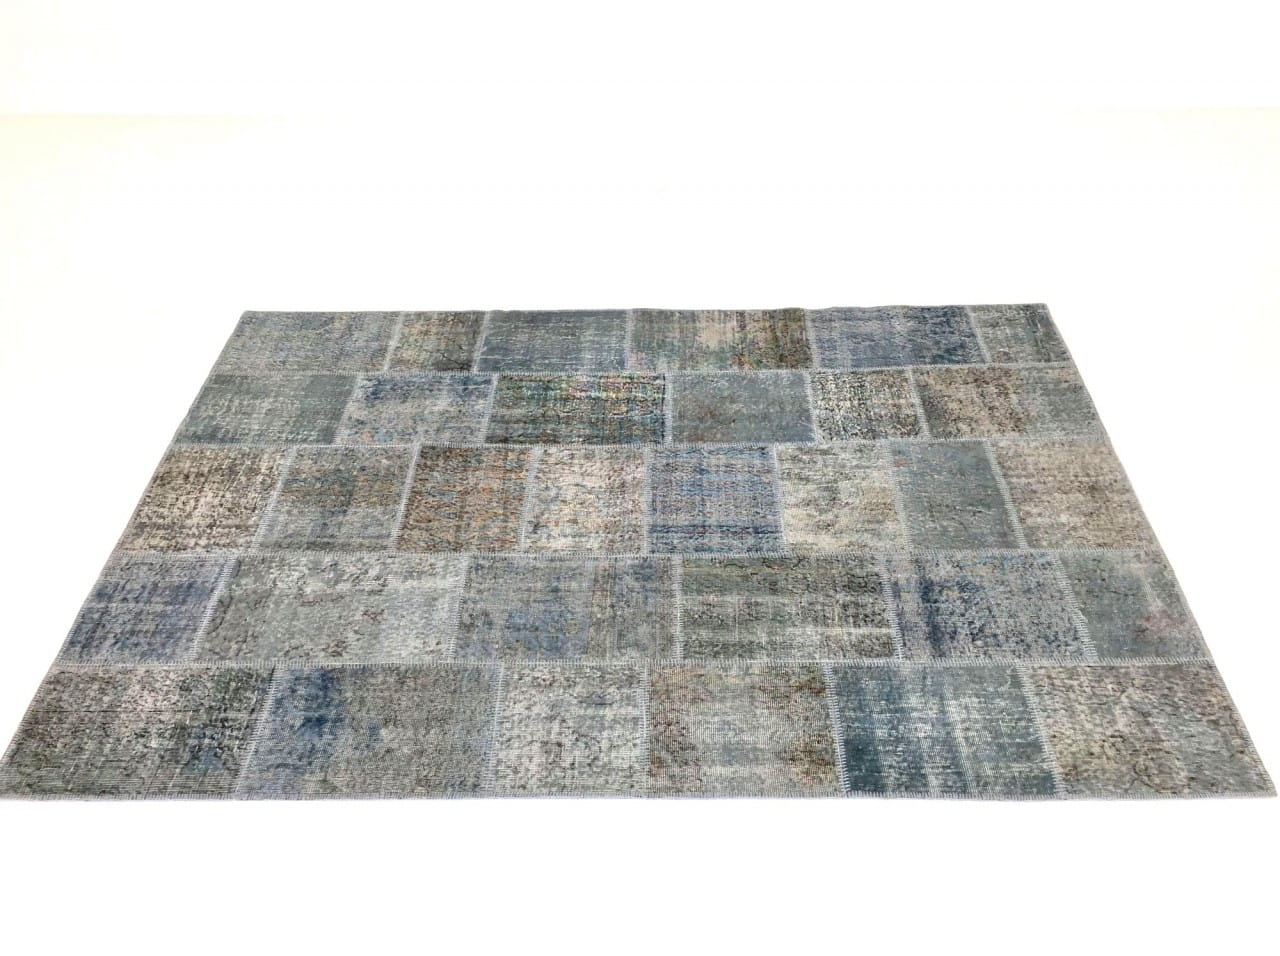 SARTORI KARMA PATCH Vintage Teppich in blaugrau Farbtönen